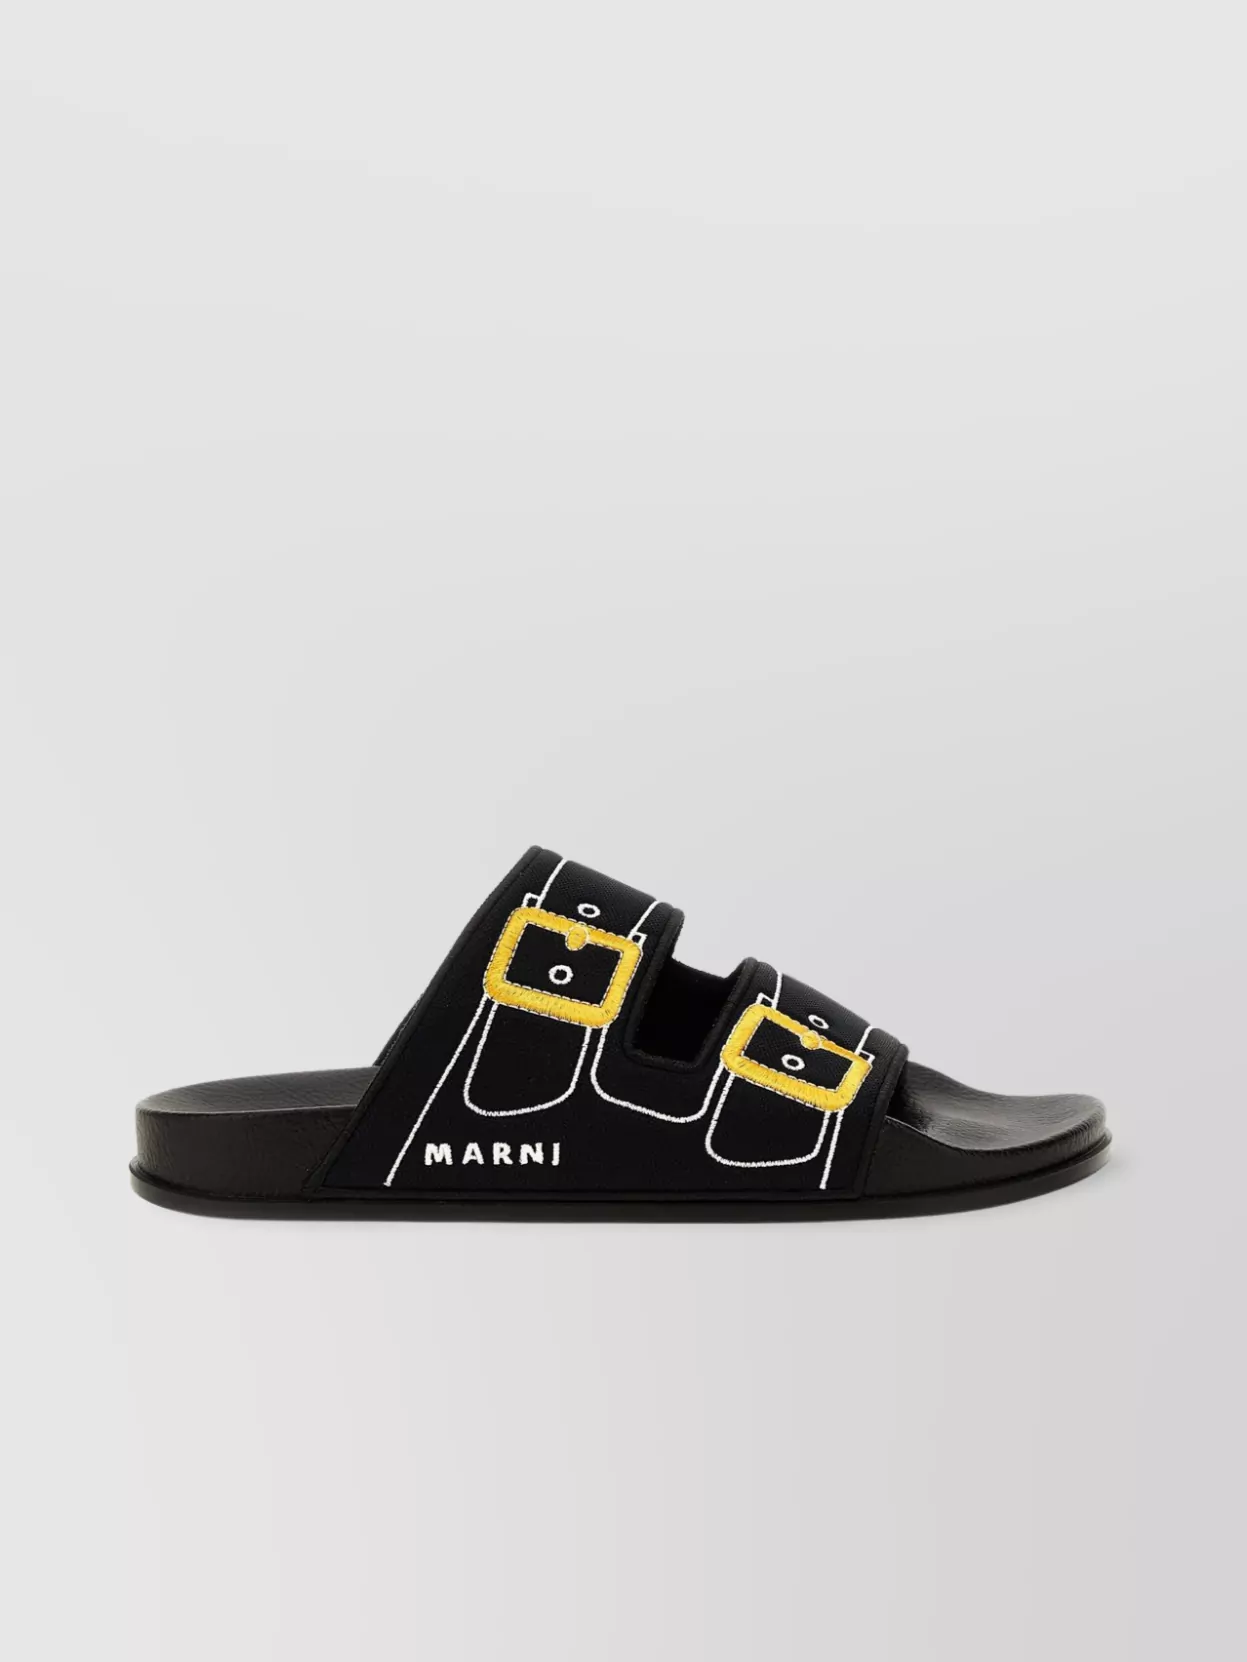 Marni Illusion Embroidered Open Toe Flat Sandals